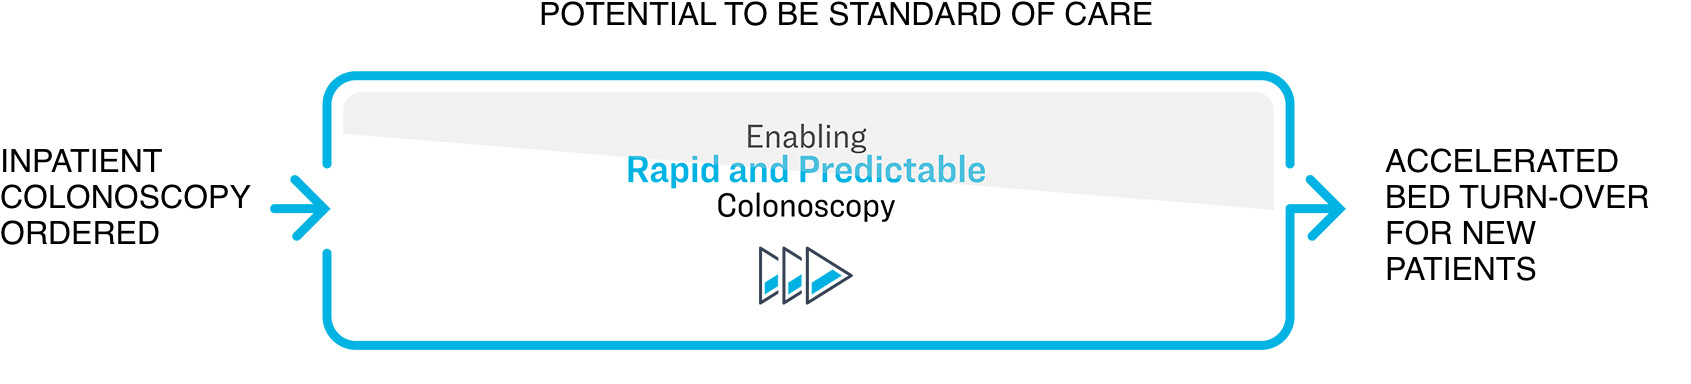 enabling rapid and predictable colonoscopy